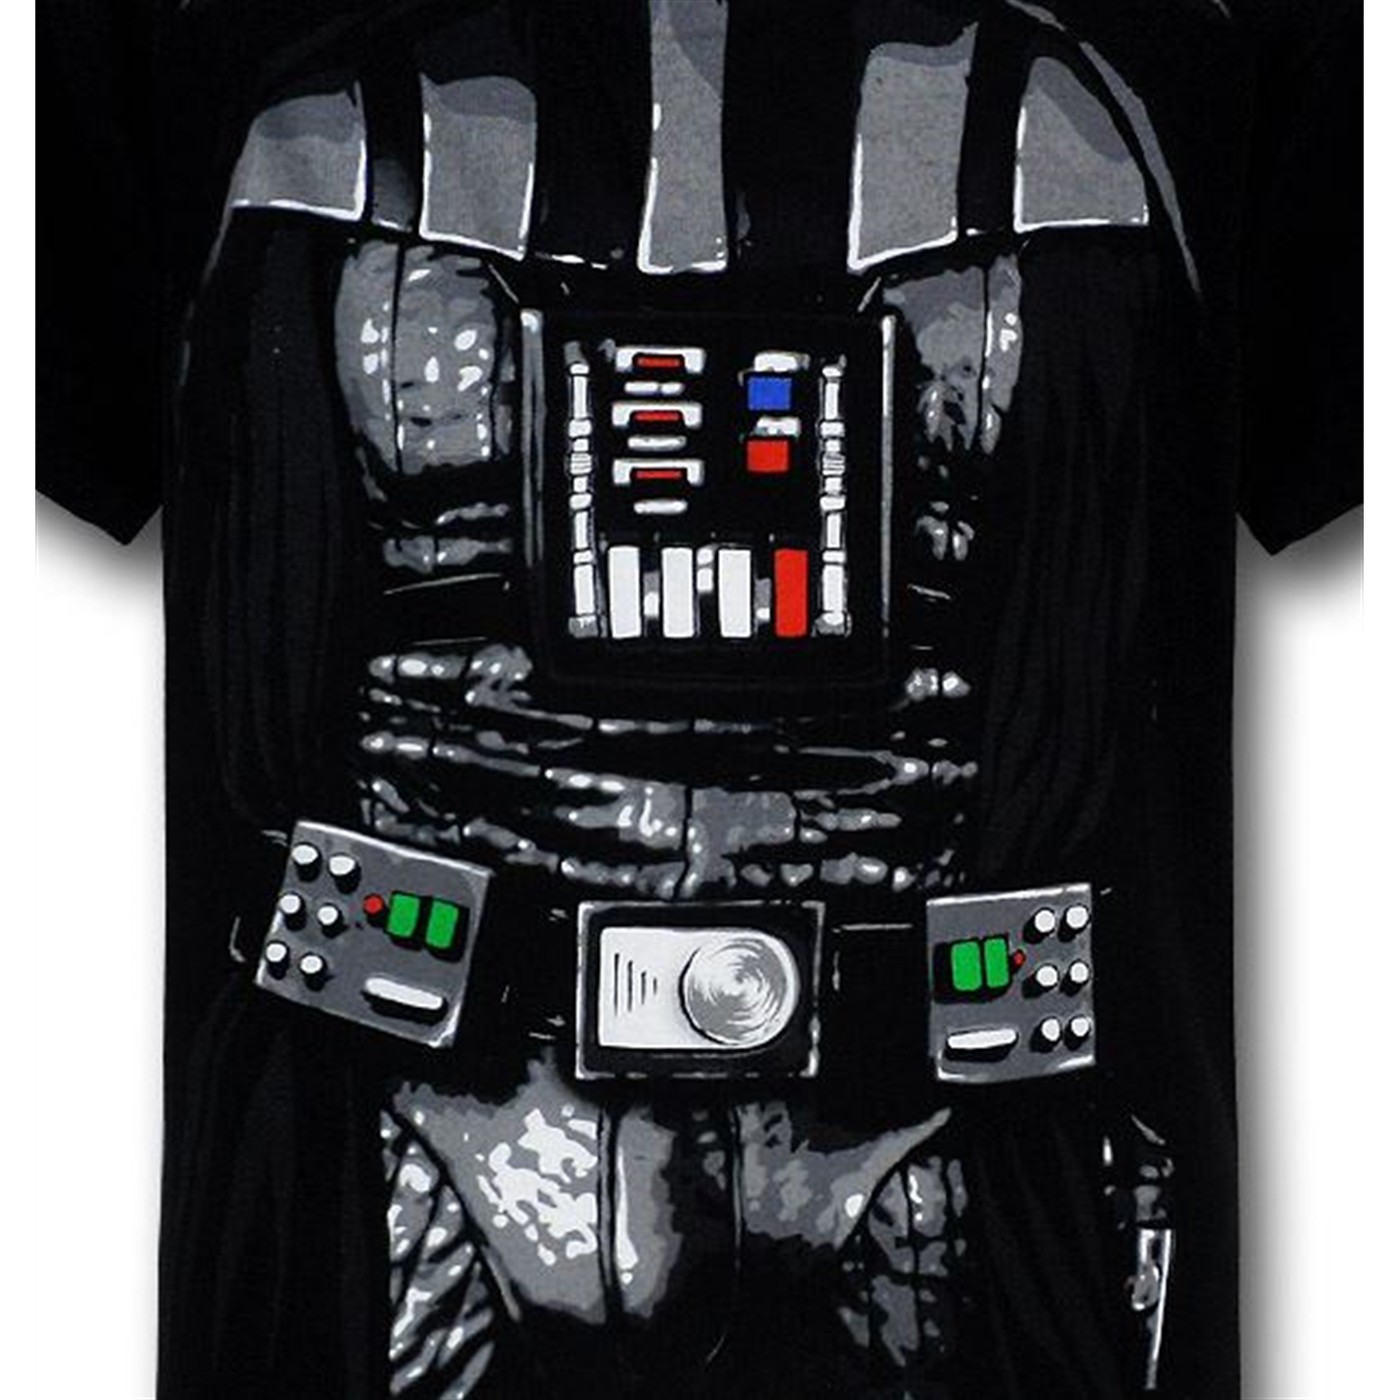 Star Wars Darth Vader Kids Costume T-Shirt